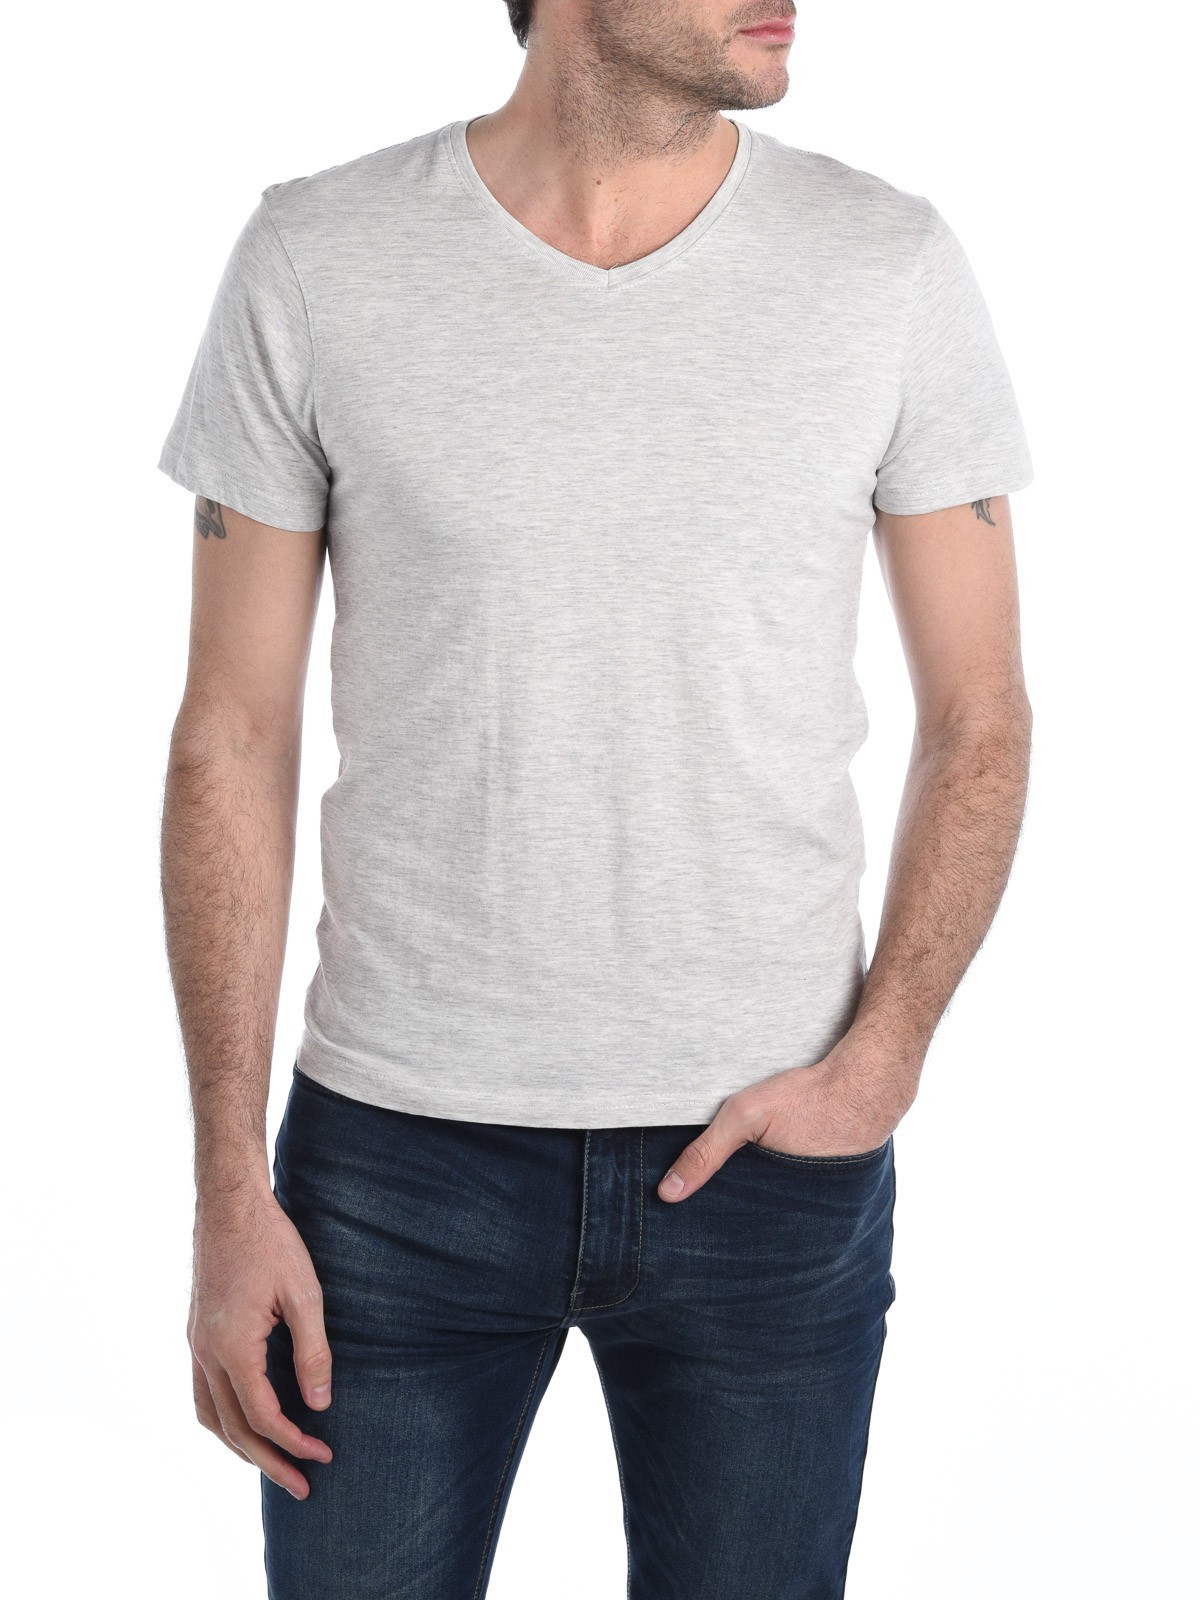 T-shirt col V blanc homme - DistriCenter